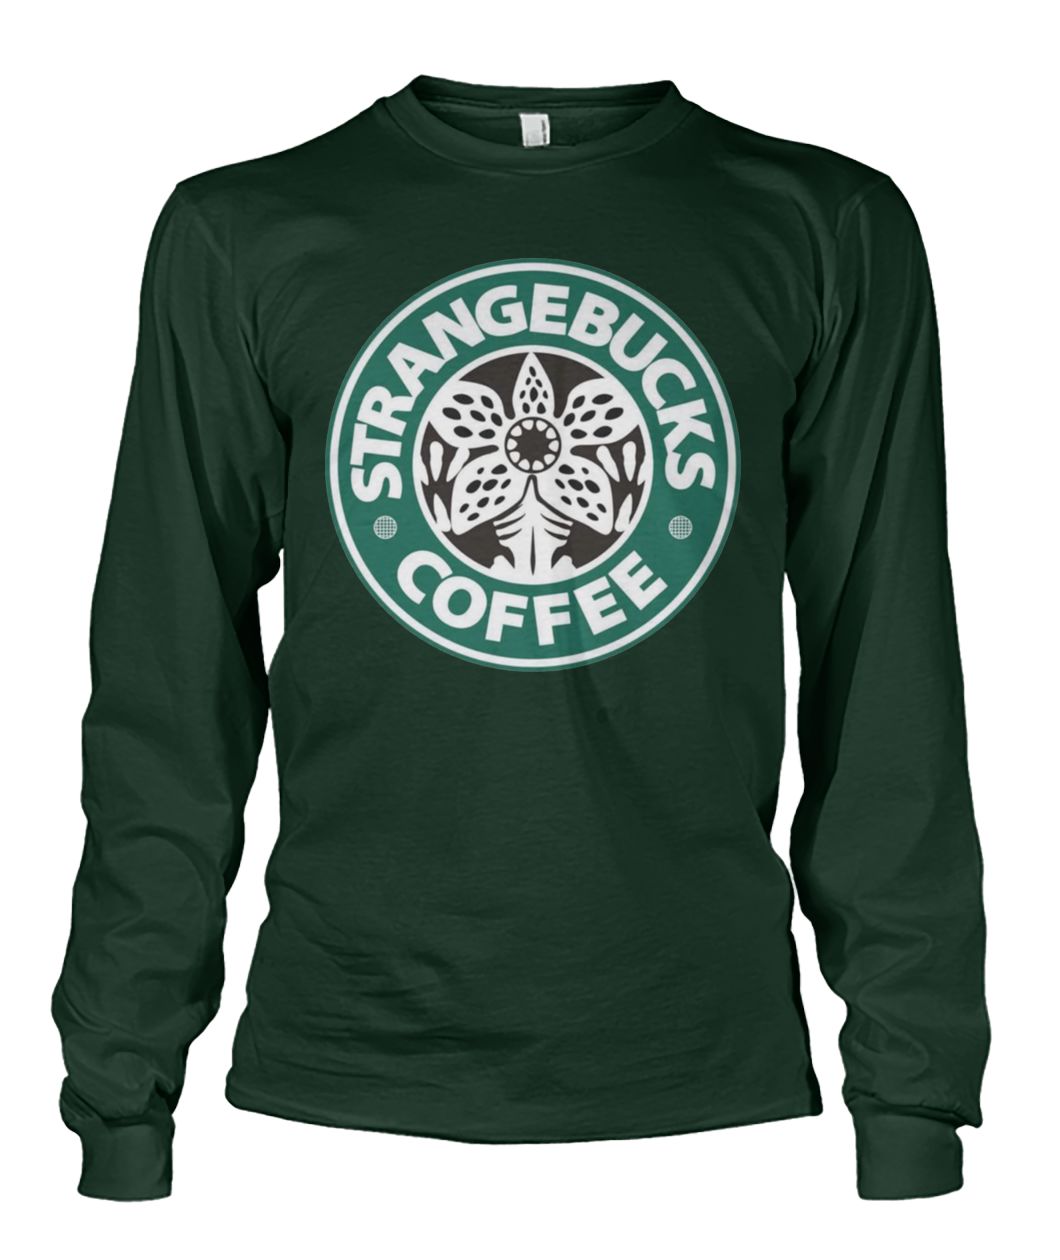 Strangebucks coffee unisex long sleeve